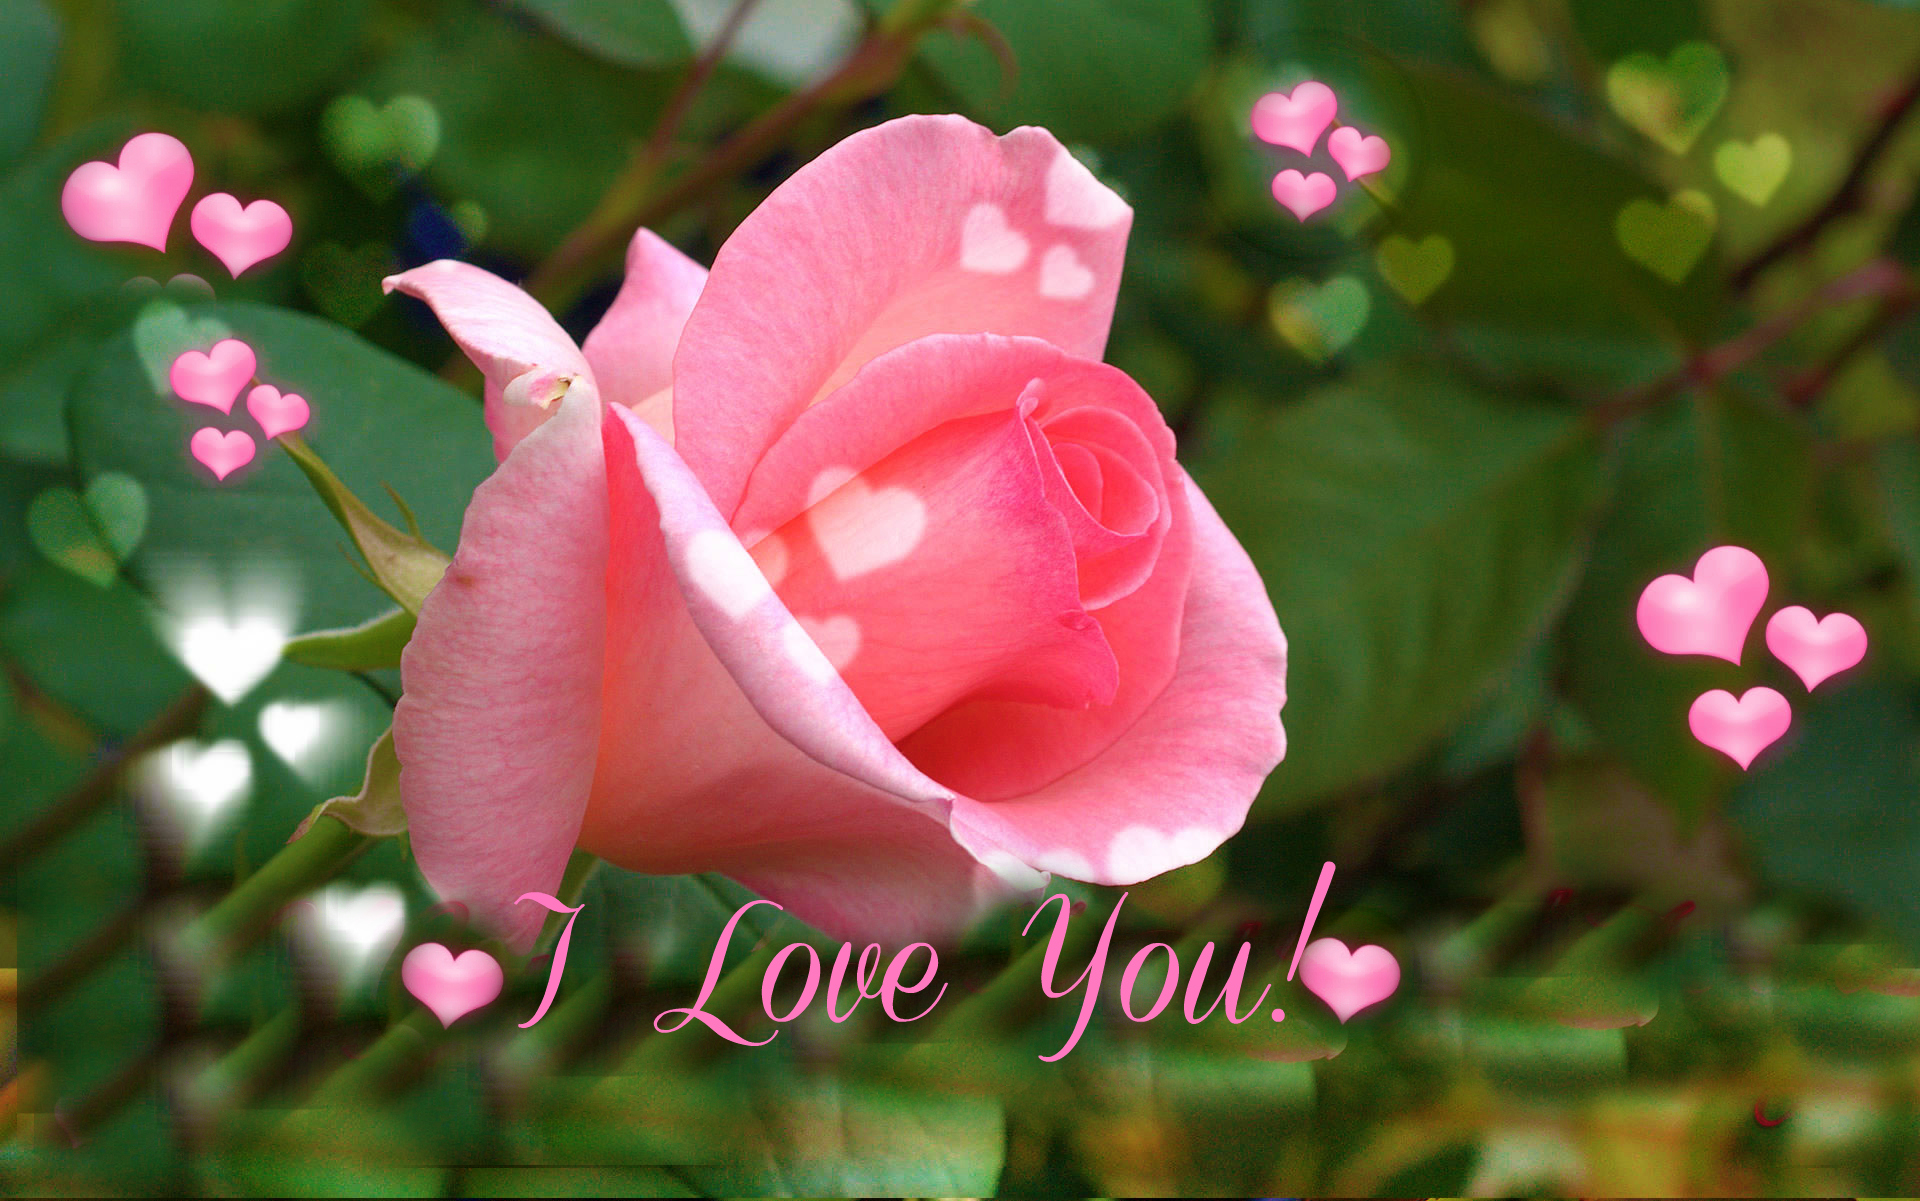 love you rose image download